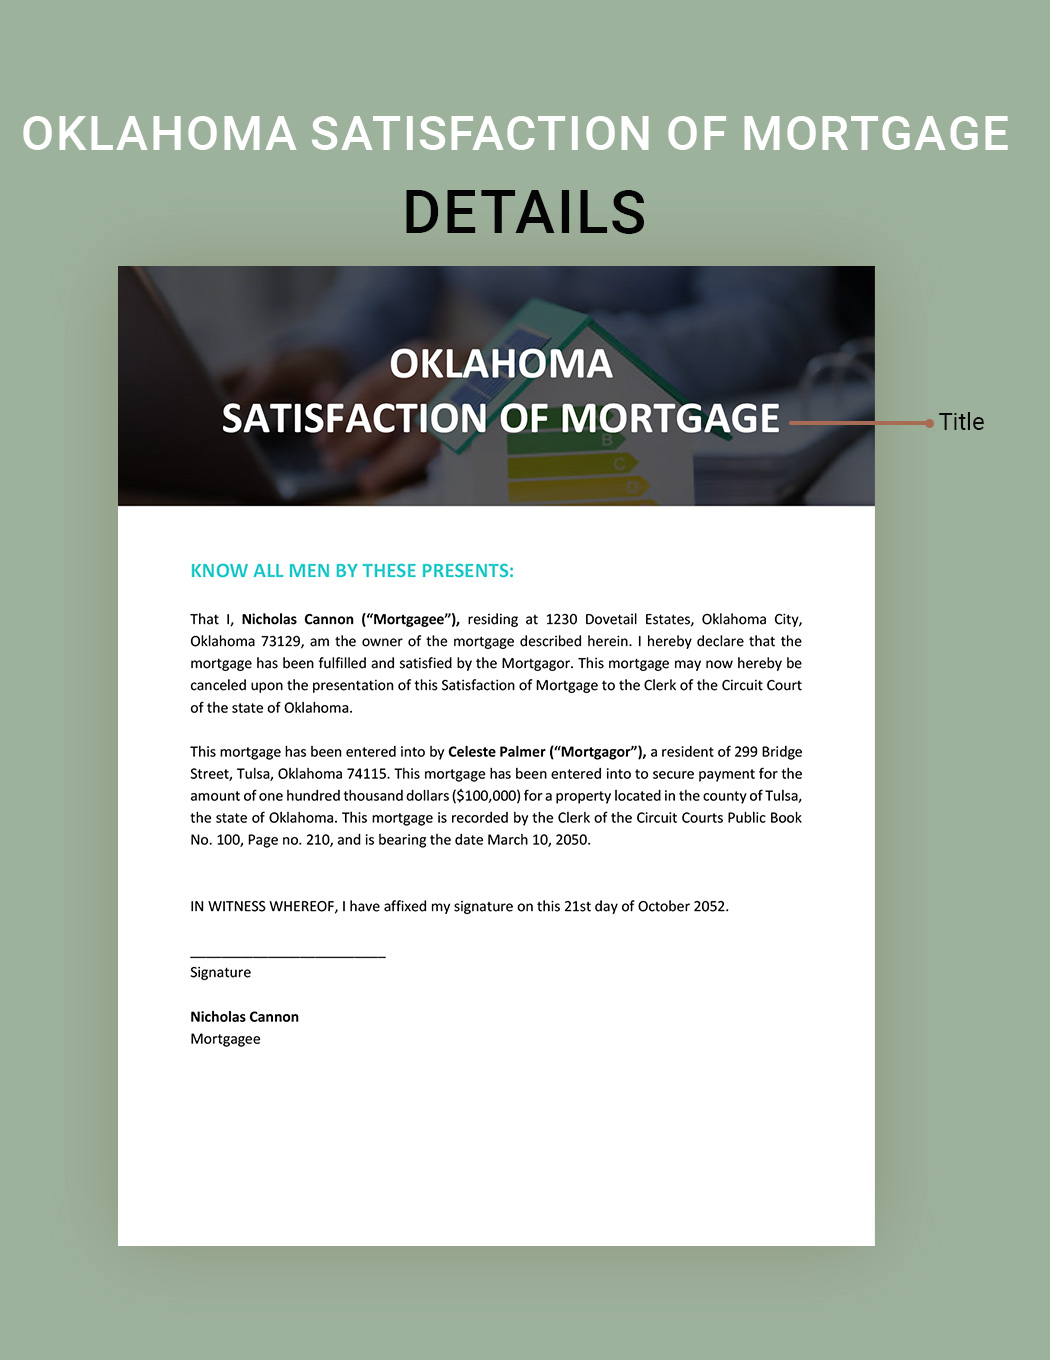 Oklahoma Satisfaction of Mortgage Template